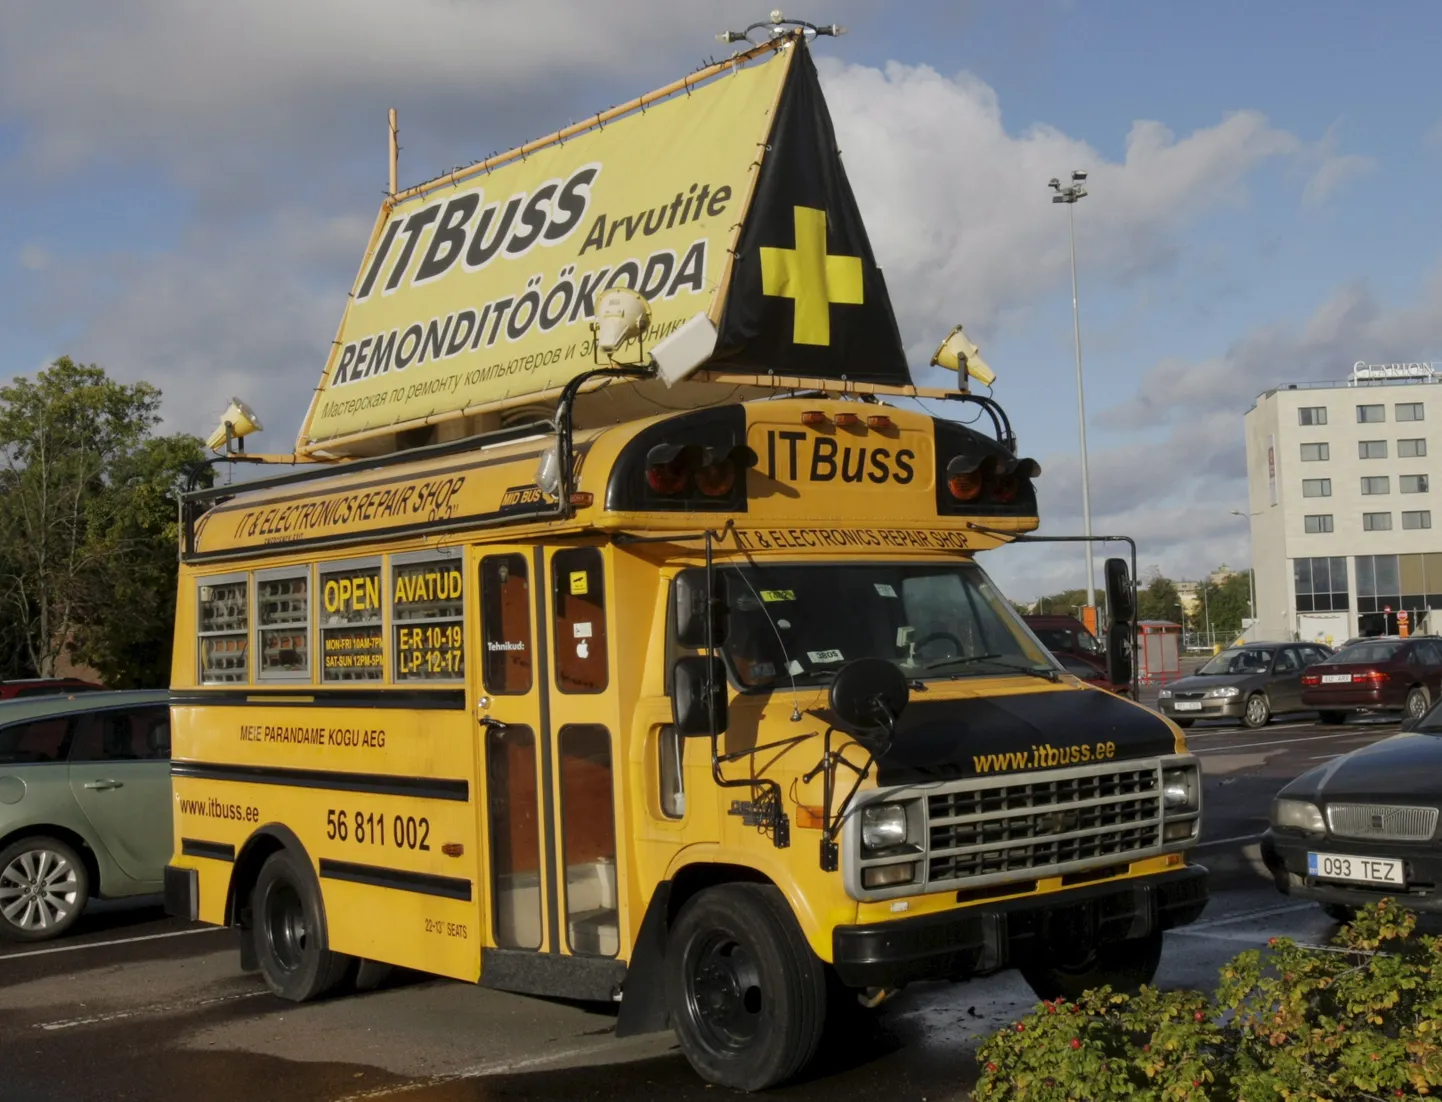 ITBuss on kollase risti kaubamärgina registreerinud